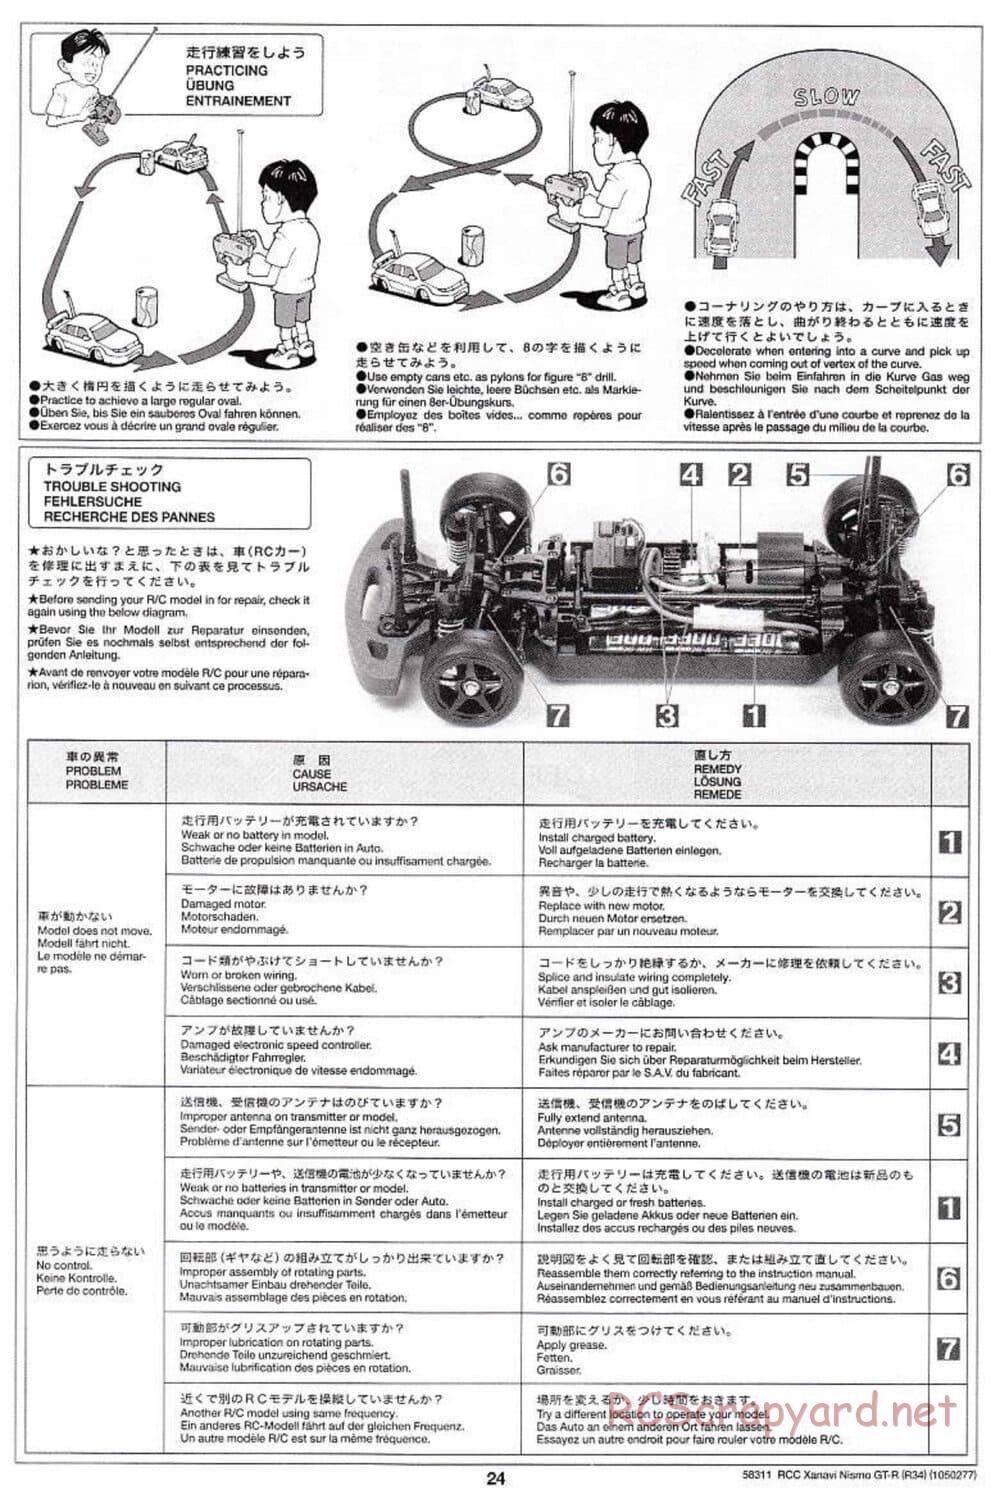 Tamiya - Xanavi Nismo GT-R (R34) - TB-02 Chassis - Manual - Page 24